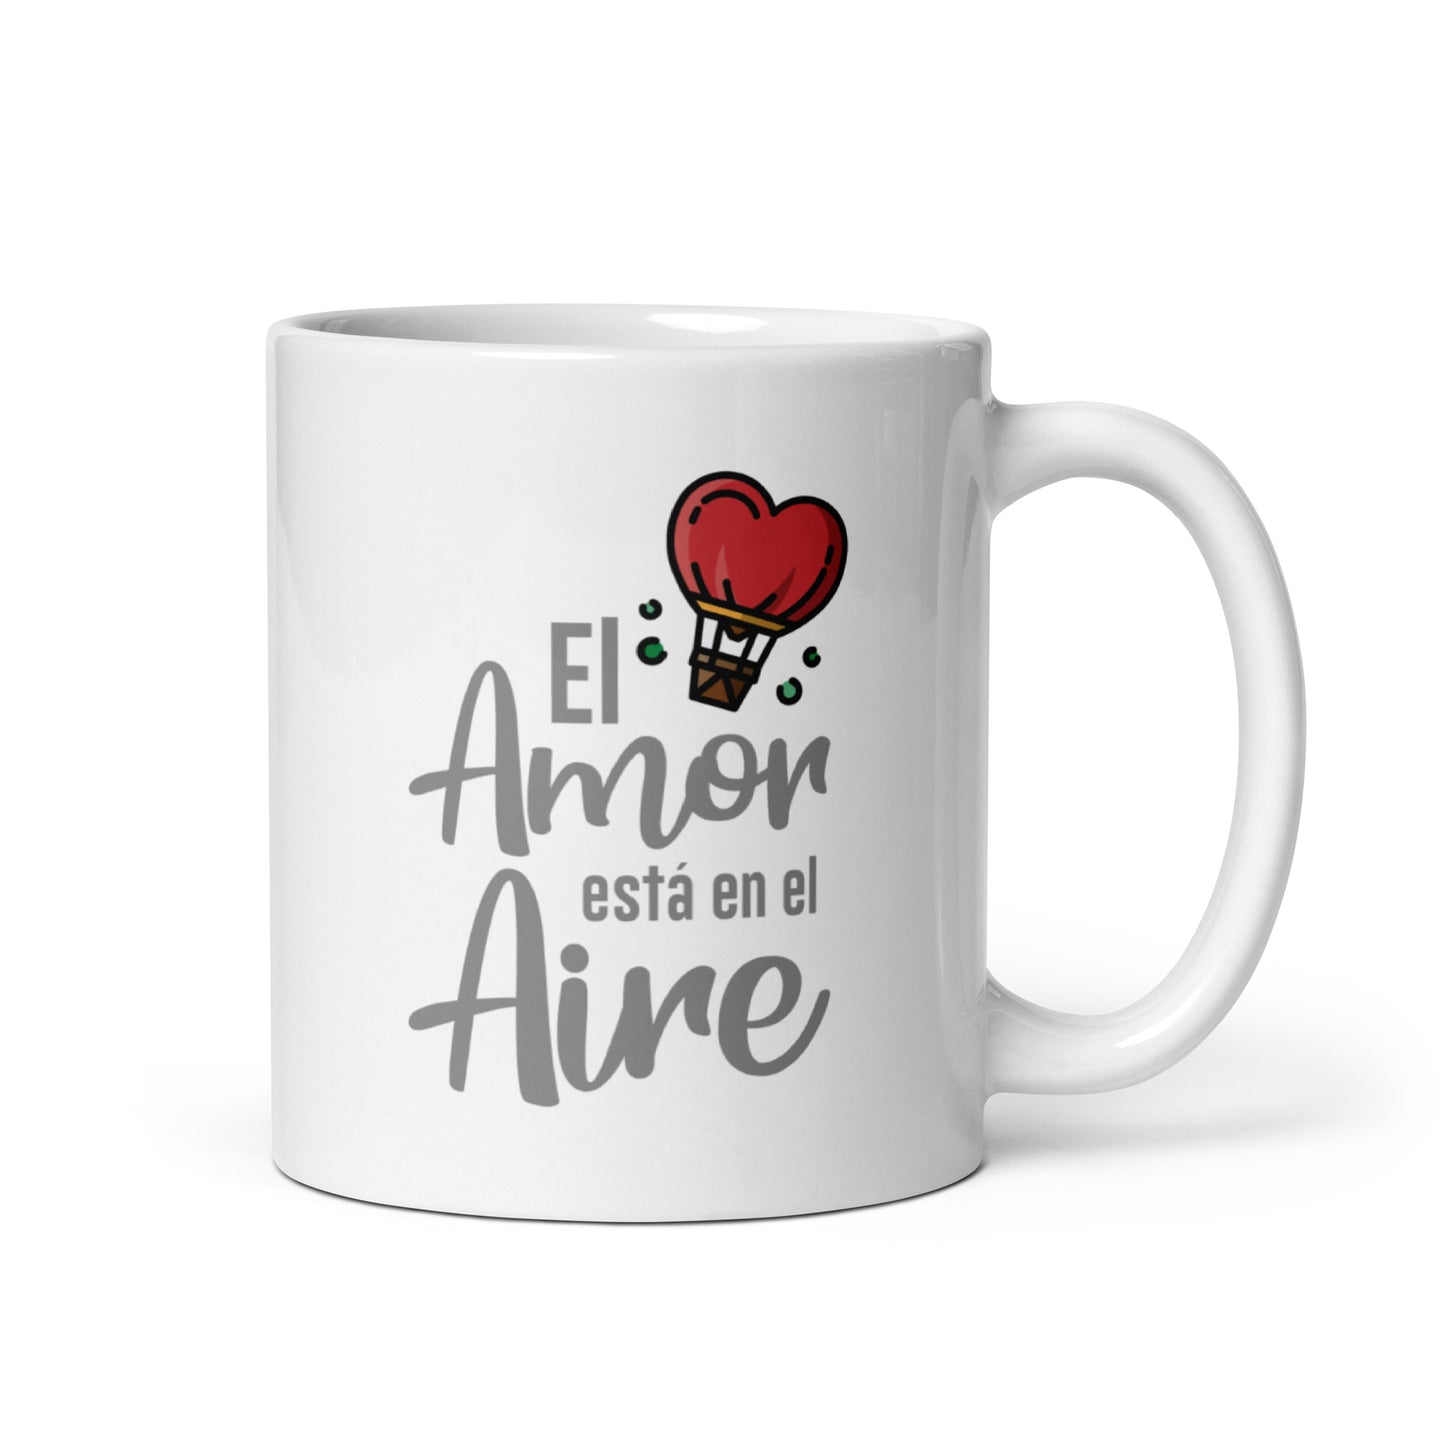 Love is in the air Mug 